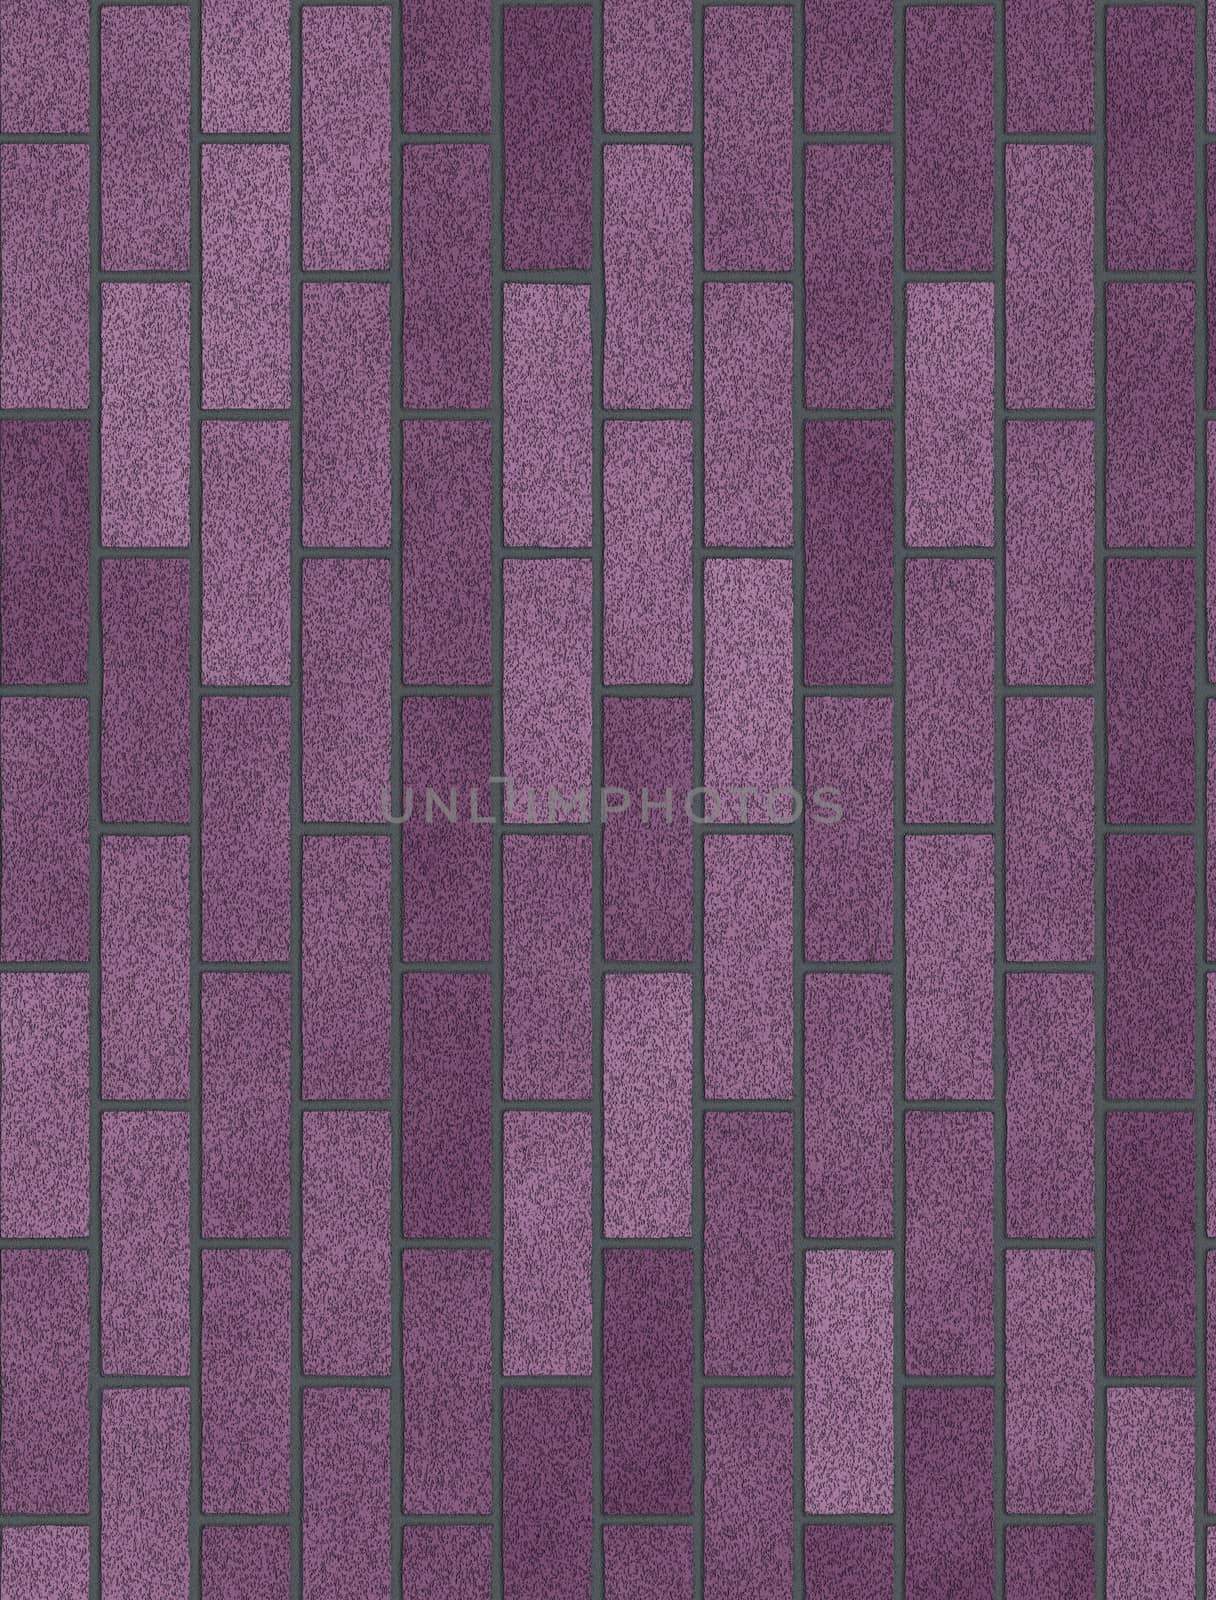 Purple brick wall by sfinks